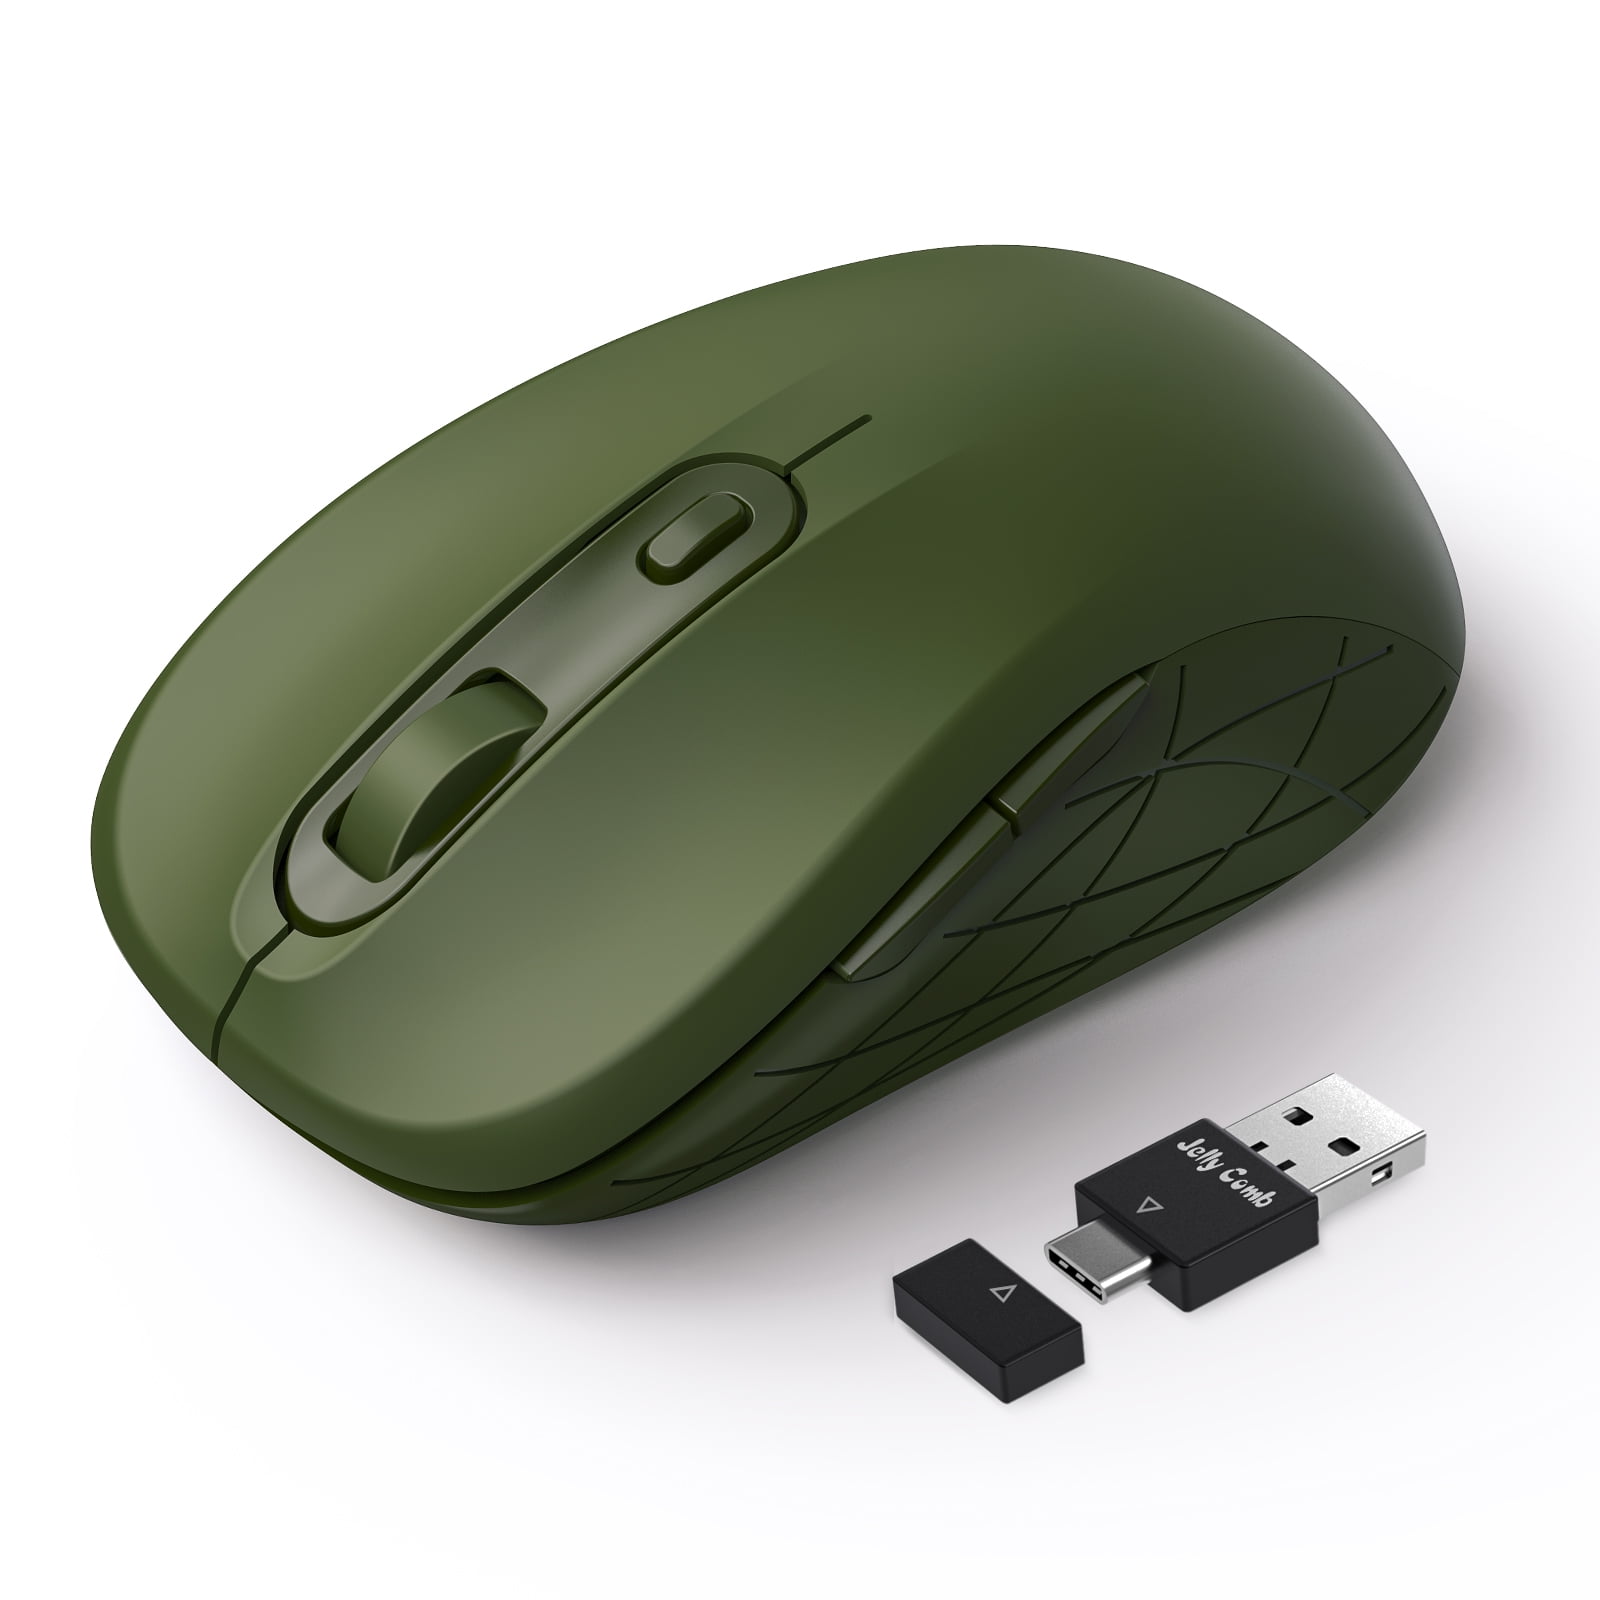 Sammentræf udstilling Instrument Wireless Mouse,Jelly Comb USB C Mouse,Silent Ergonomic Mouse,Computer Mouse  with 3 DPI for Mac OS Windows Laptop MS048 - Walmart.com